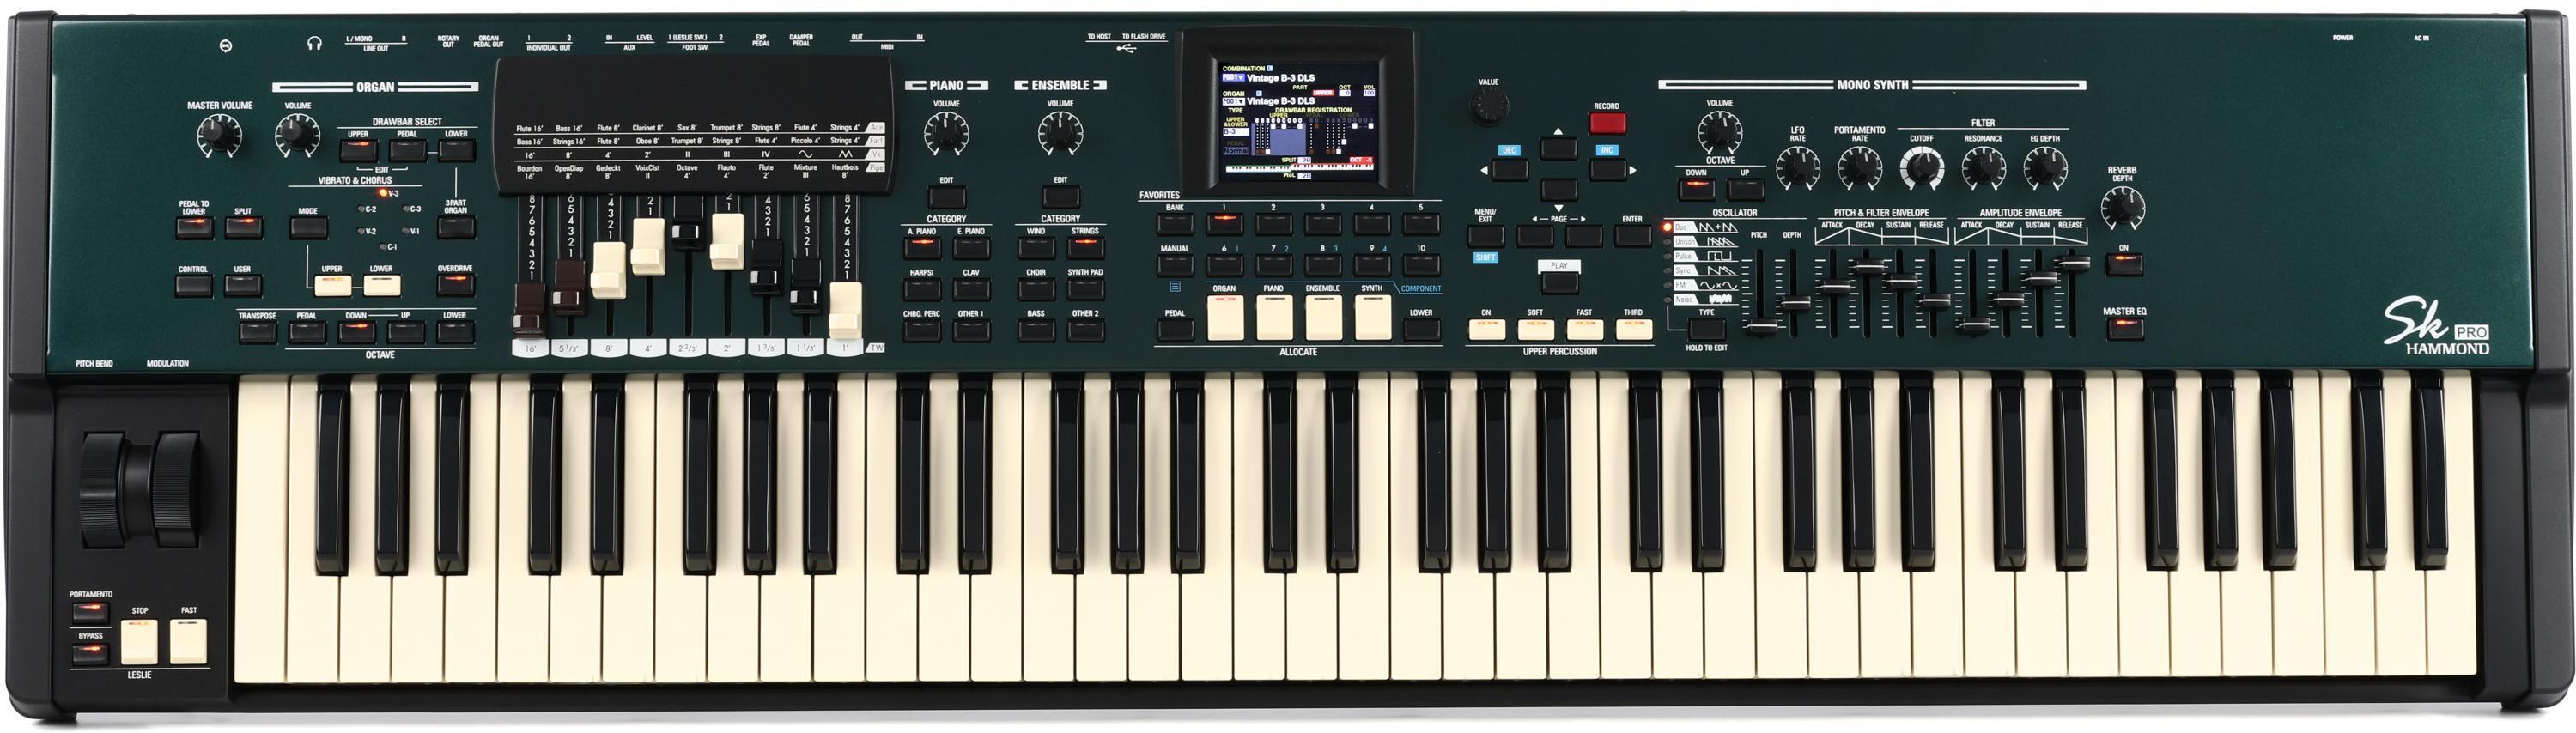 Bundled Item: Hammond SK Pro 73-key Keyboard/Organ with 4 Sound Engines